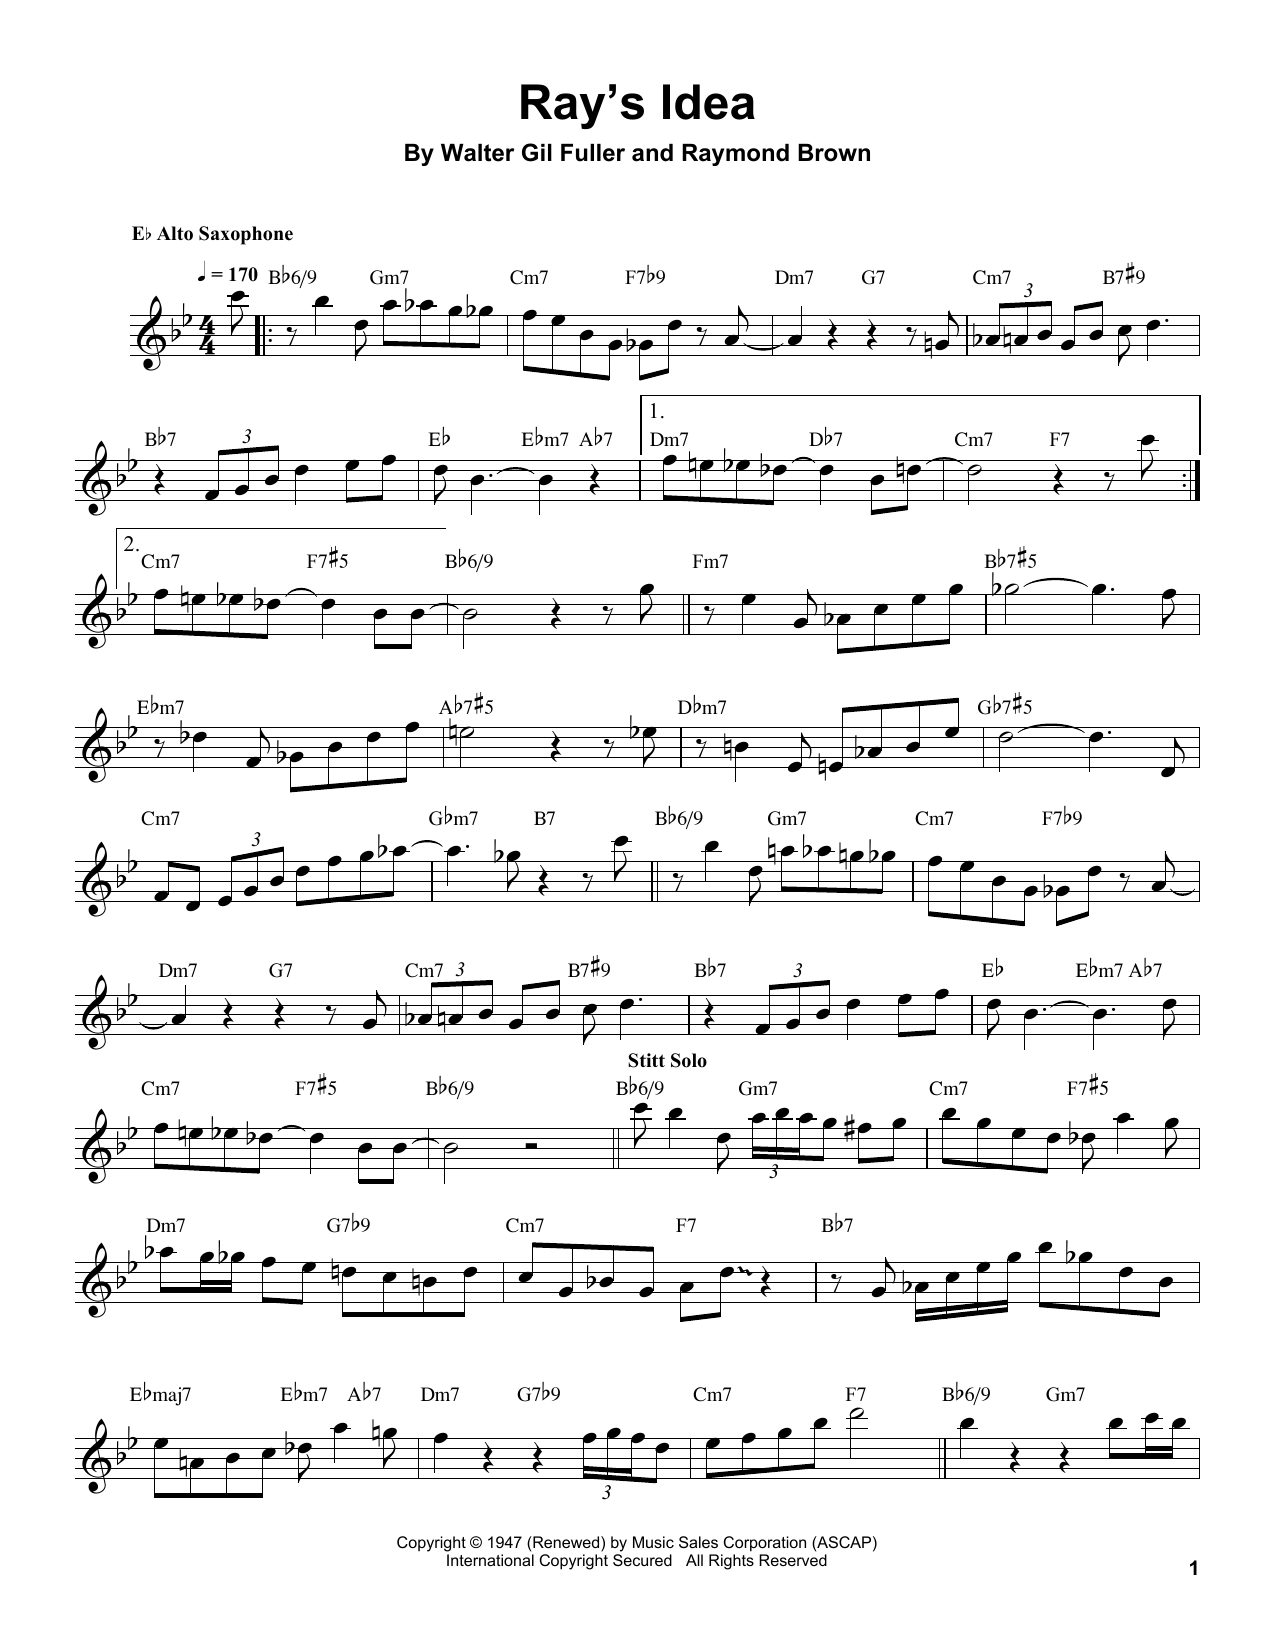 Sonny Stitt Ray's Idea sheet music notes and chords arranged for Tenor Sax Transcription